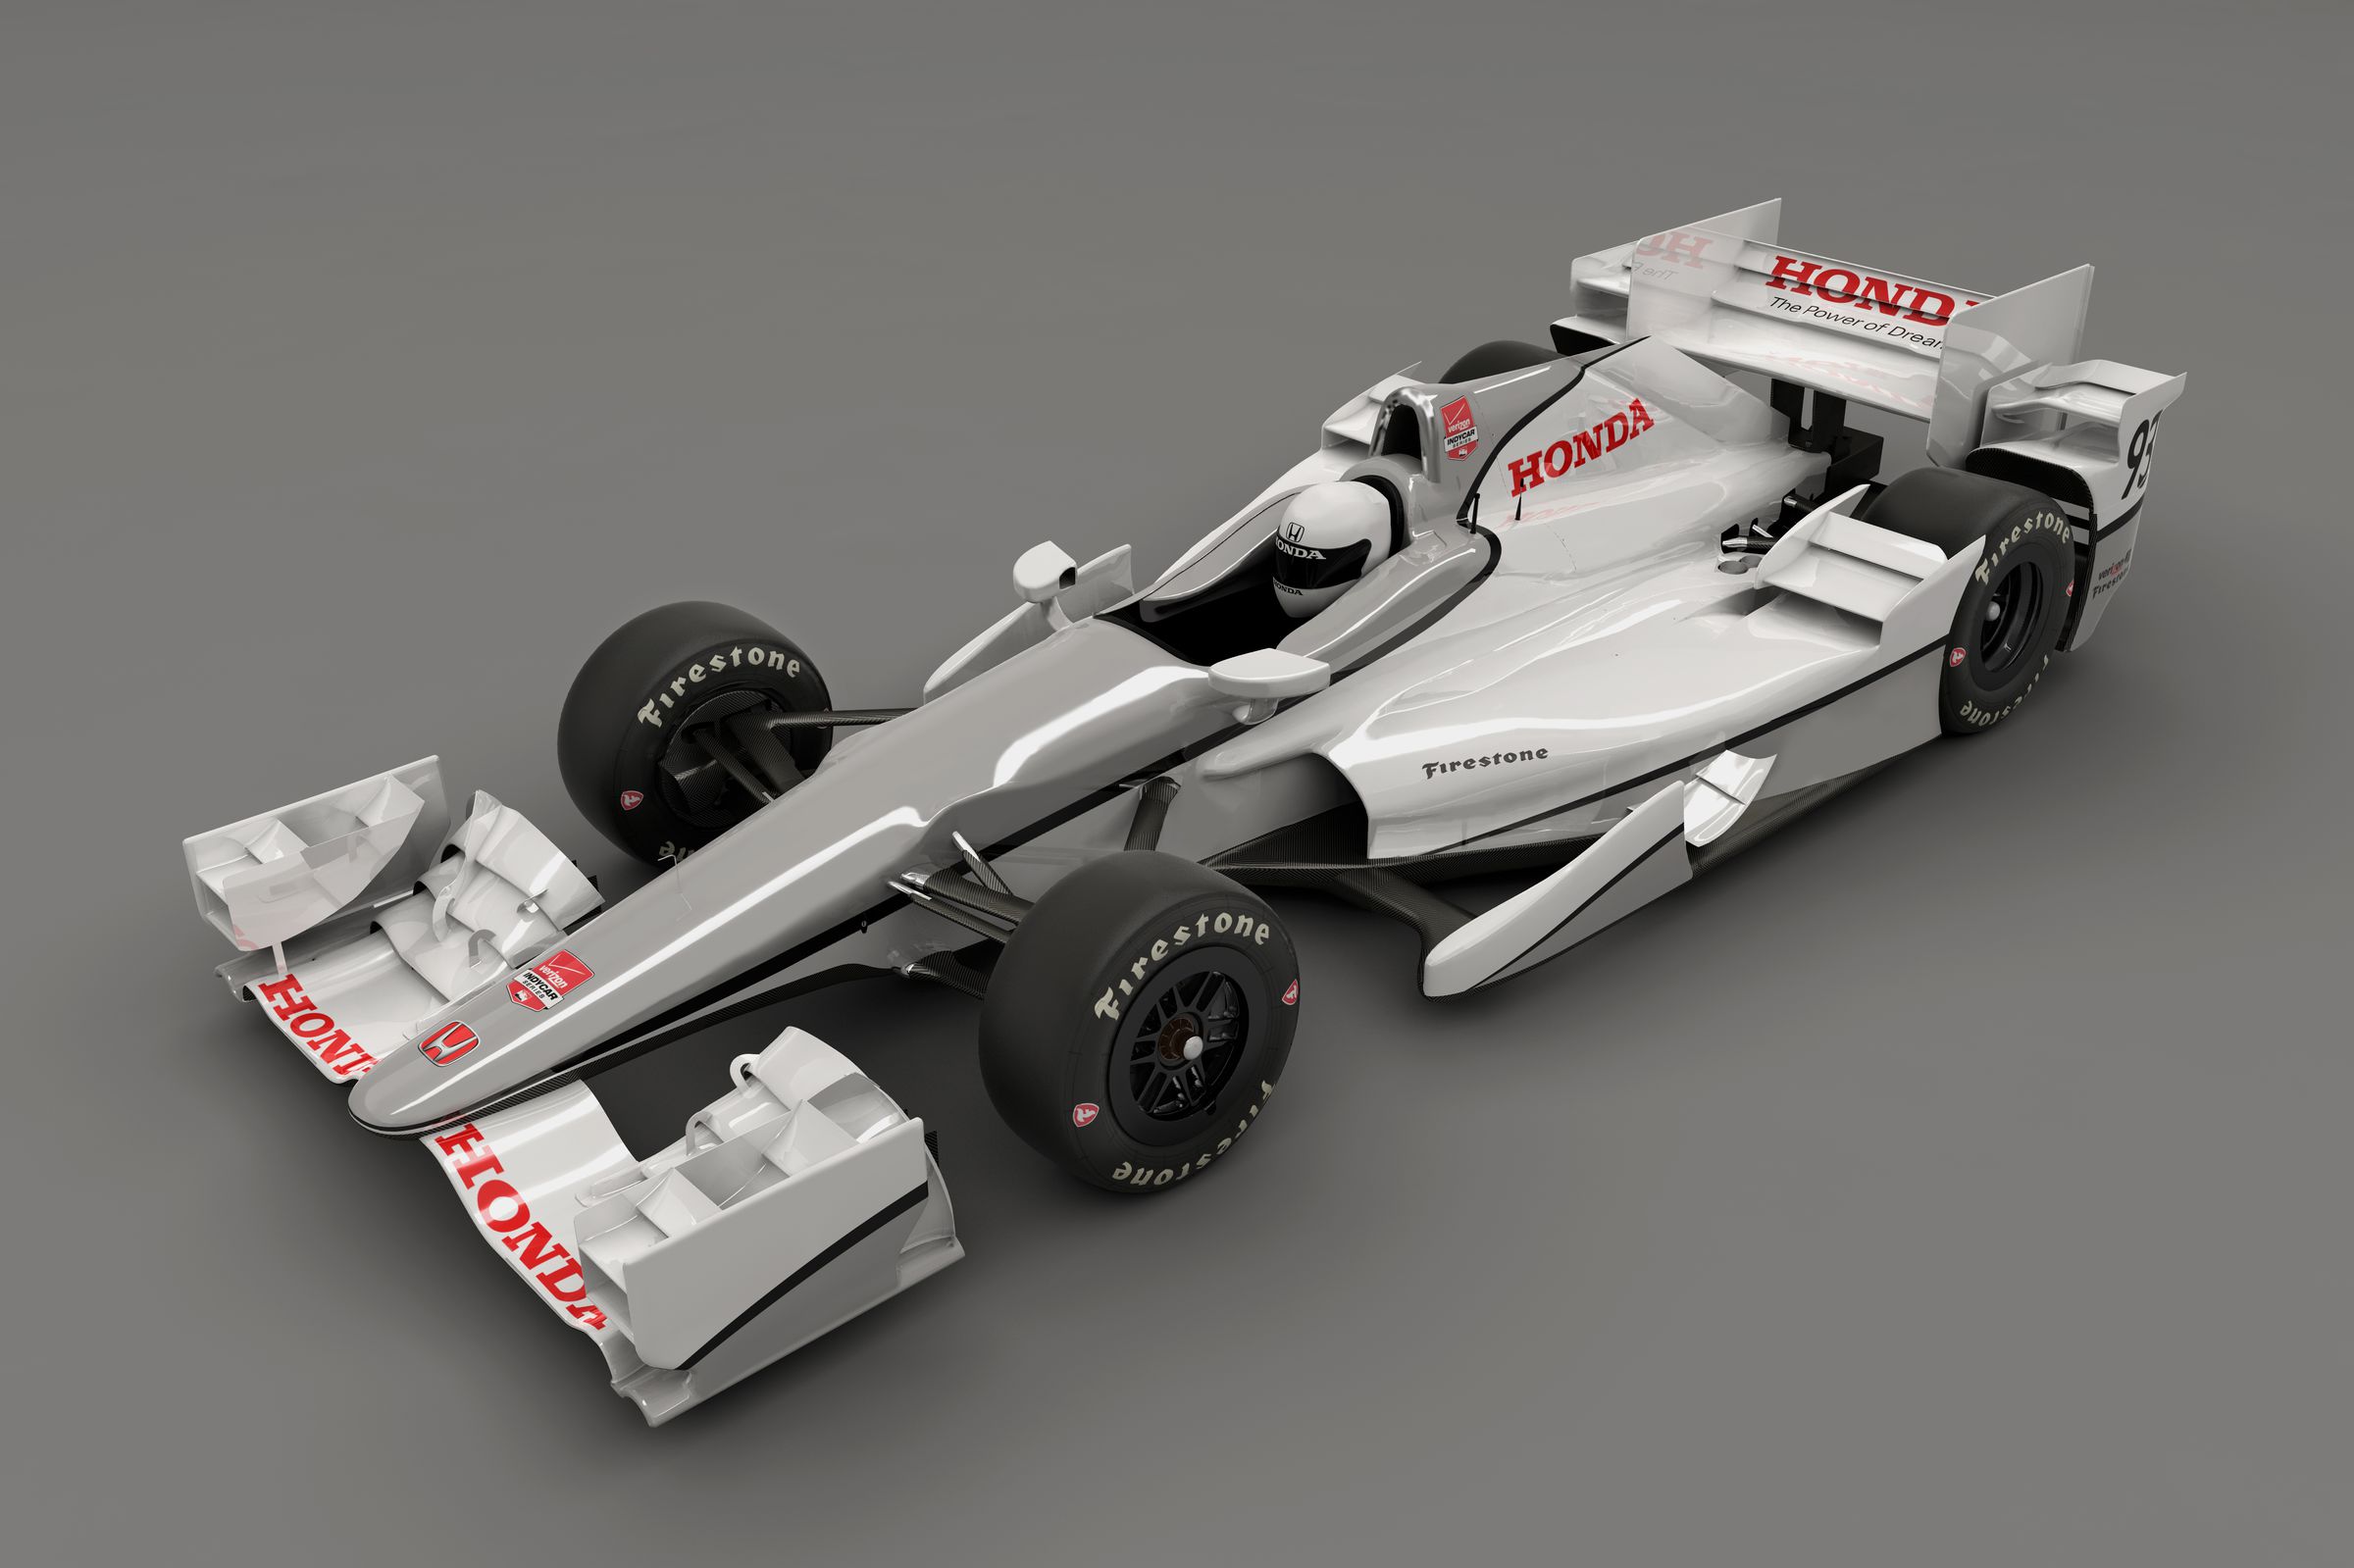 The 2015 Honda IndyCar AeroKit